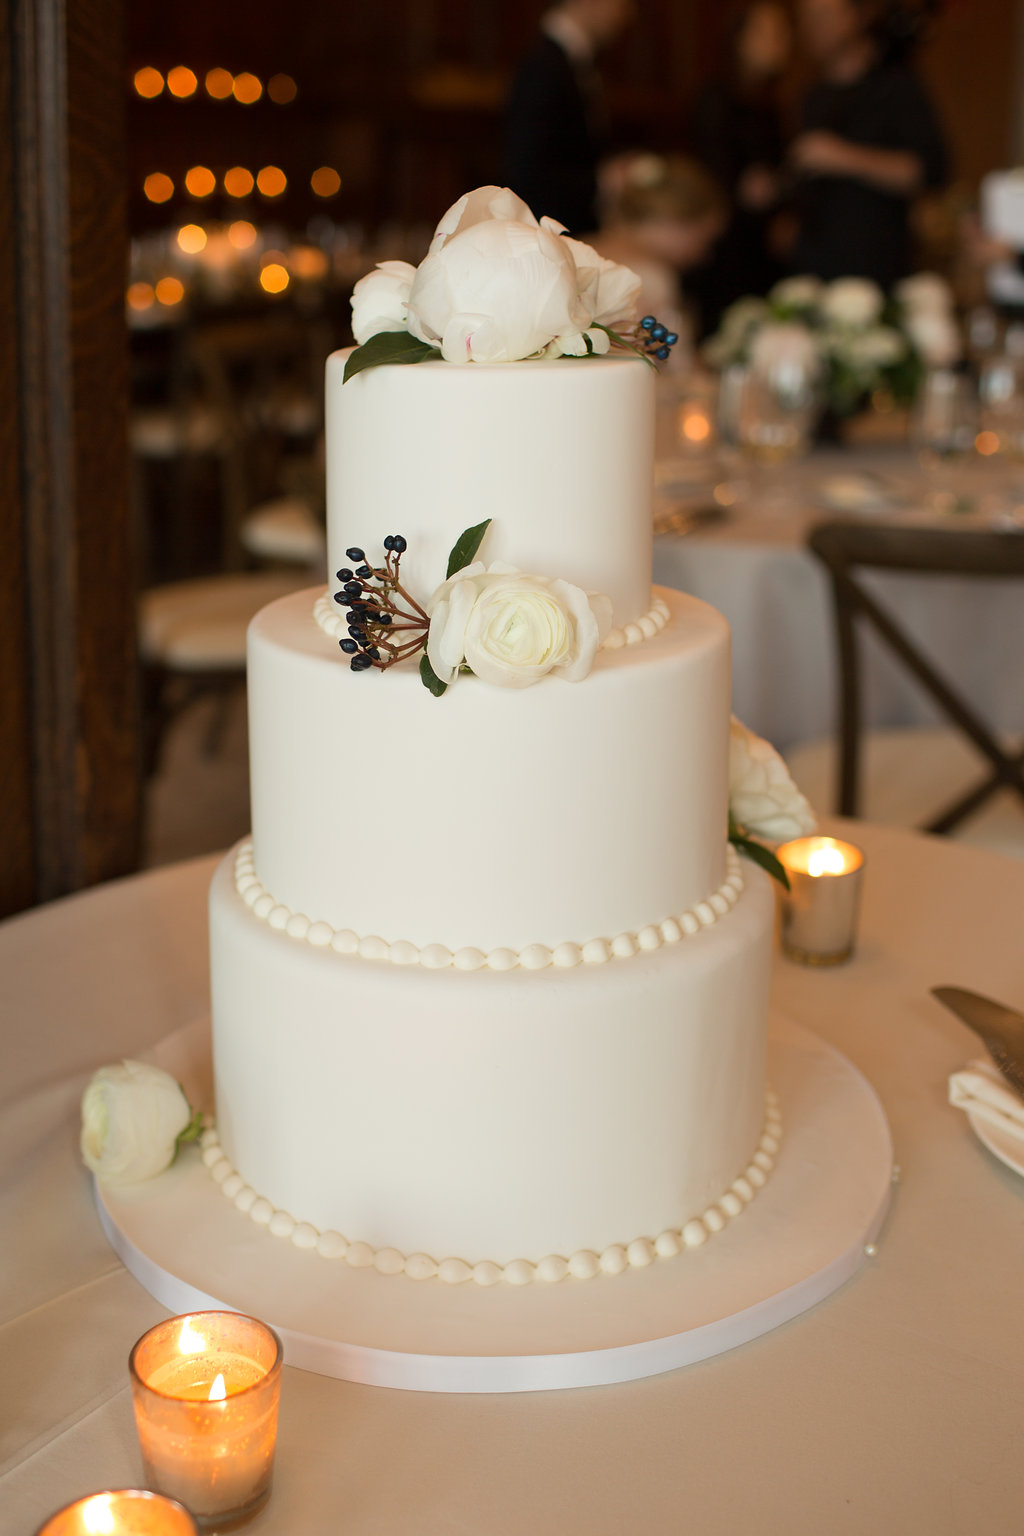 Classic ivory wedding cake ranunculus and navy berries.